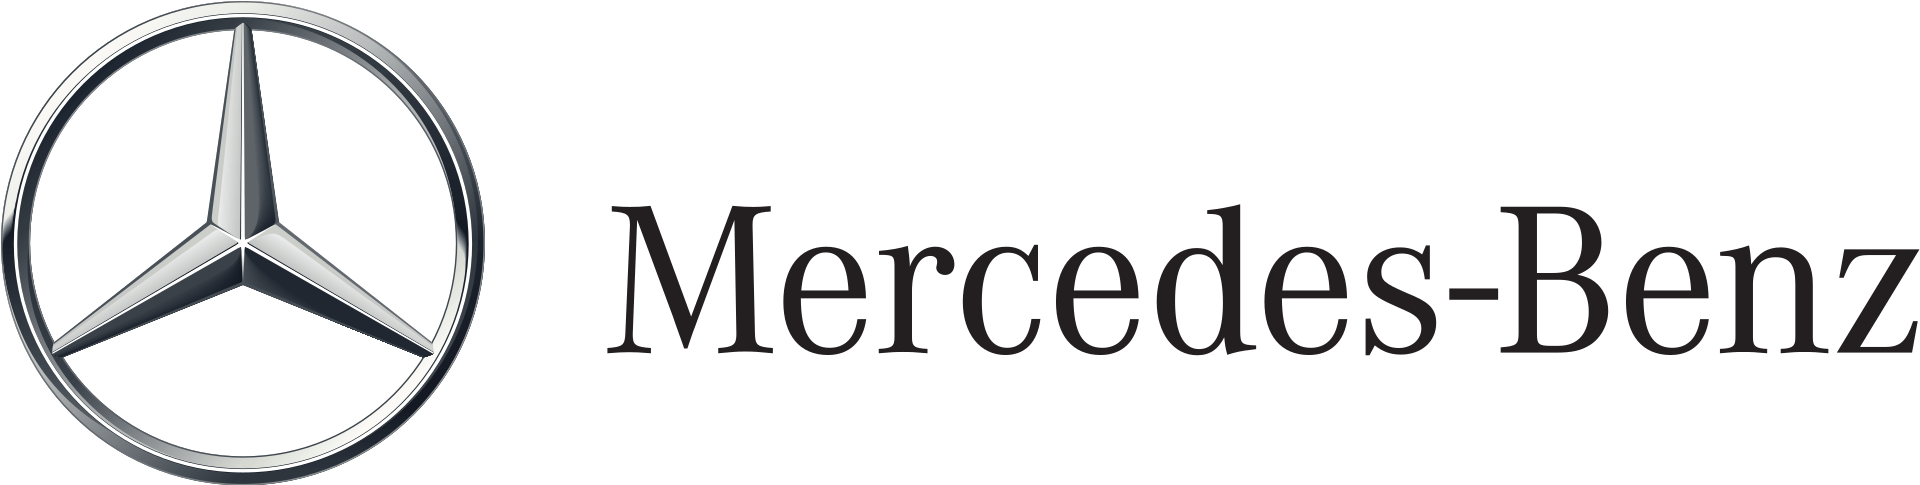 Mercedes-Benz official logo